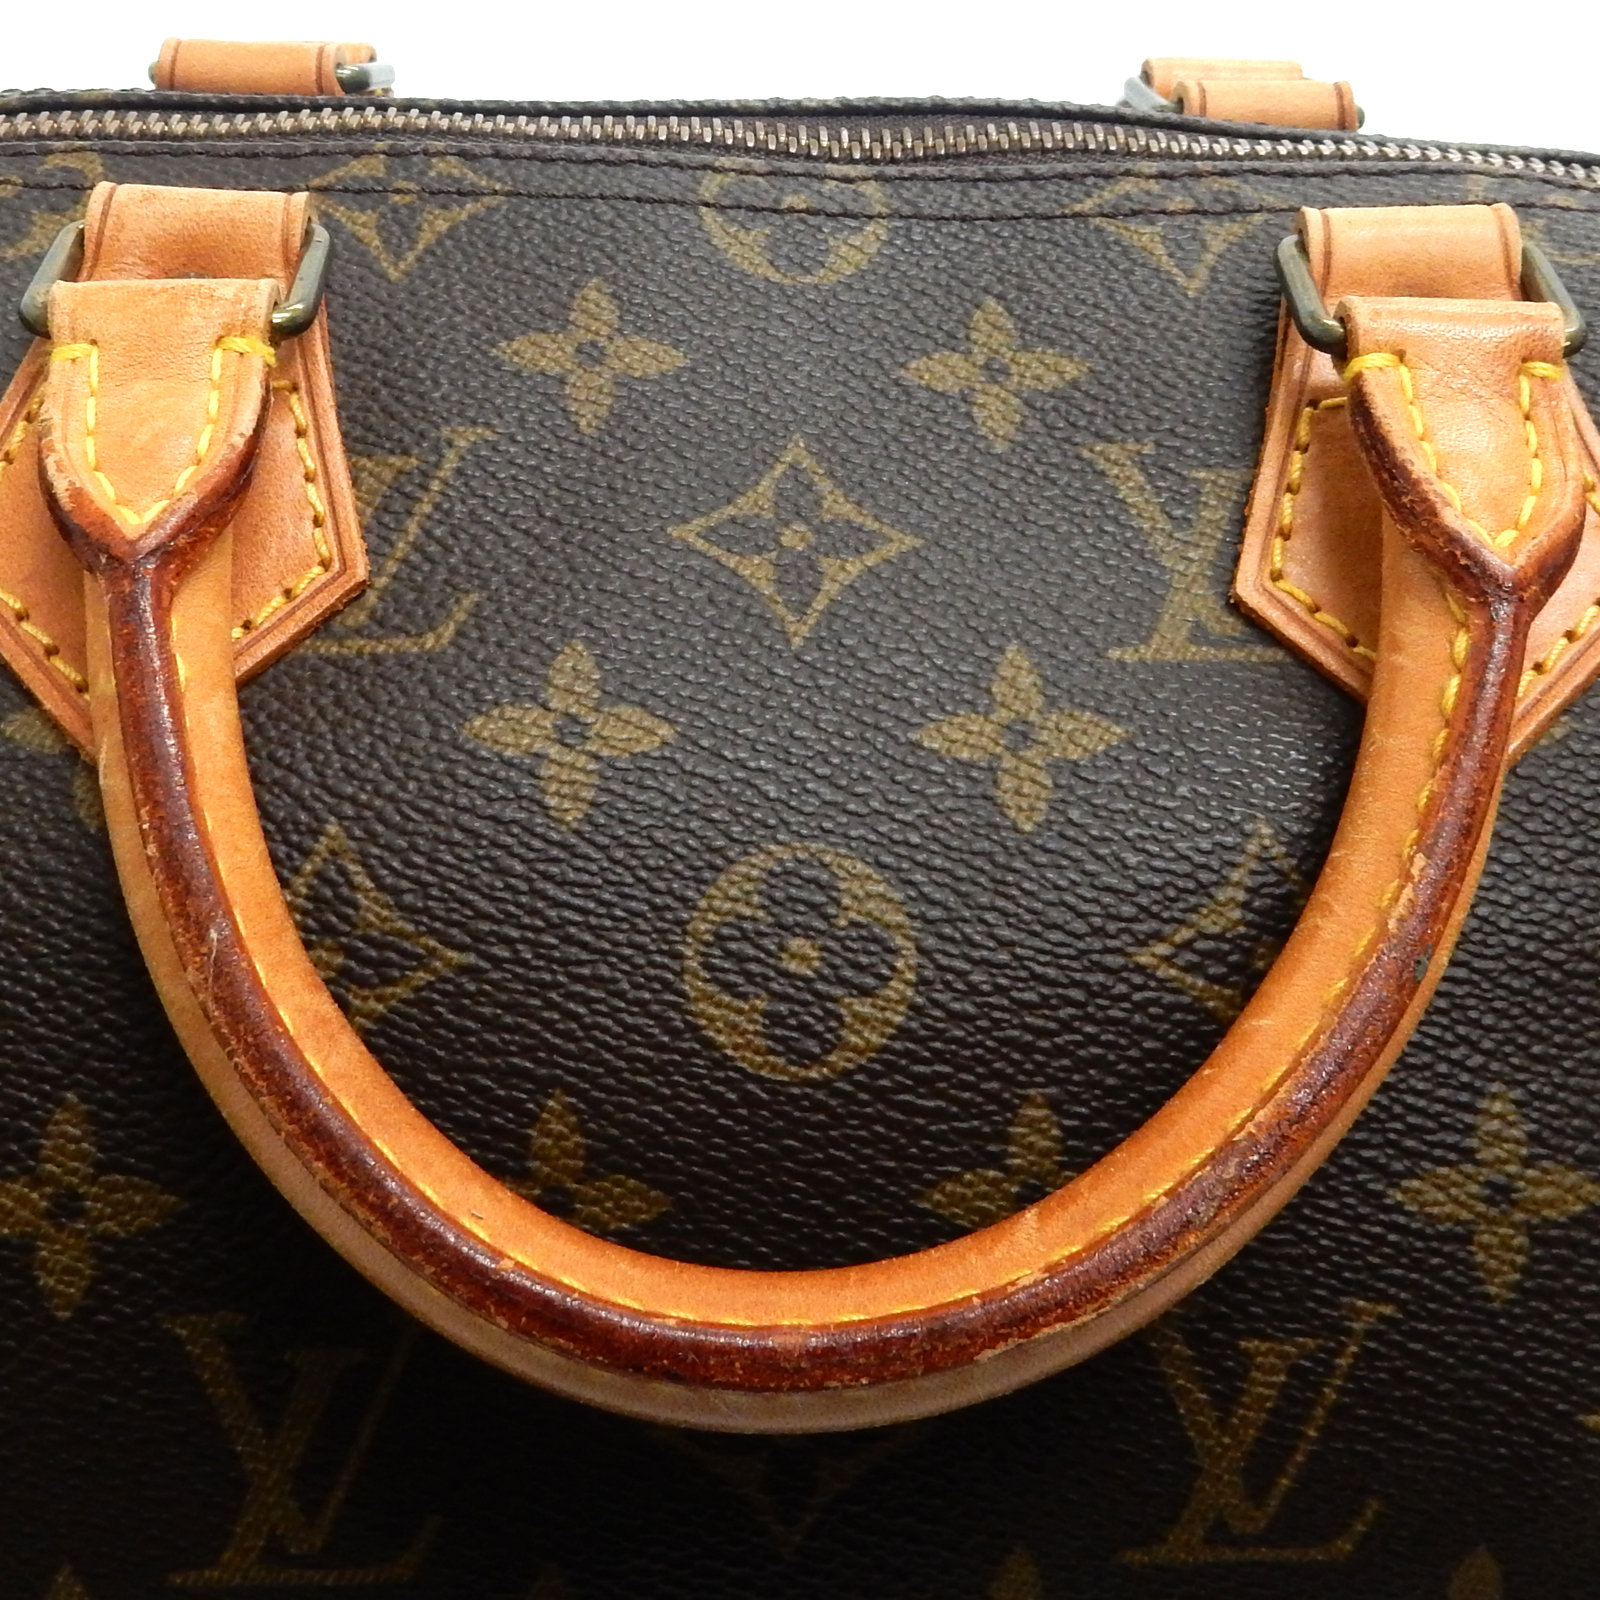 Rise-on LOUIS VUITTON MONOGRAM SPEEDY 35 Handbag Boston Bag Satchel Purse #186 | eBay